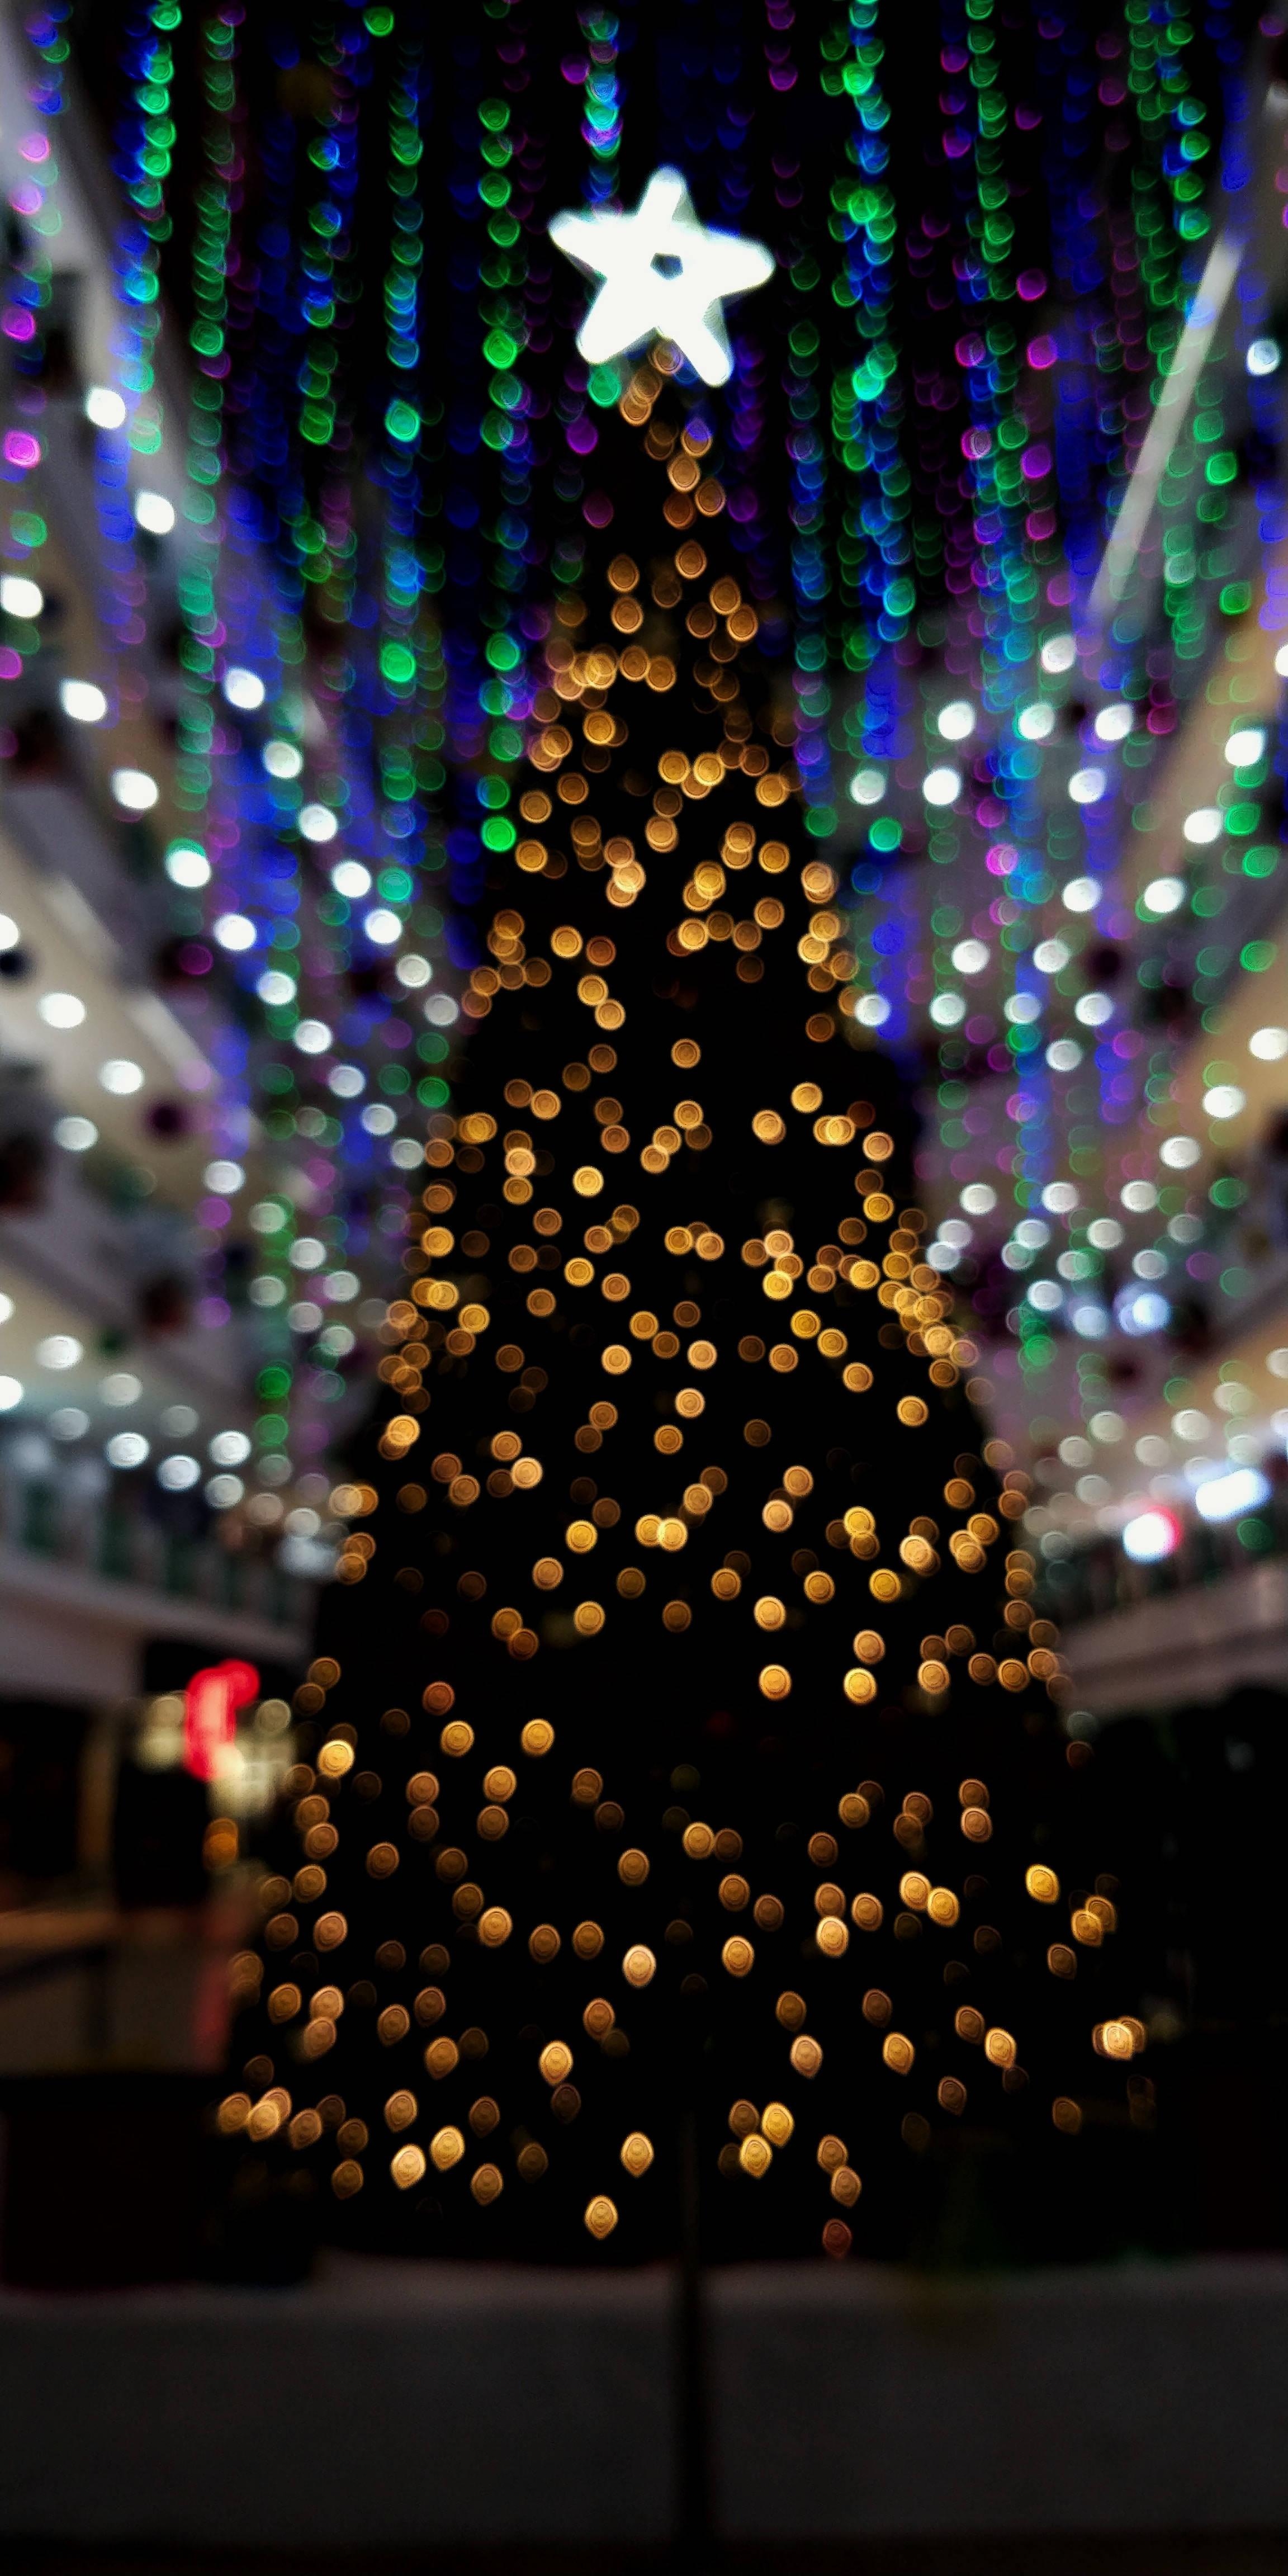 Mall Atrium Christmas Lights Blur Wallpaper